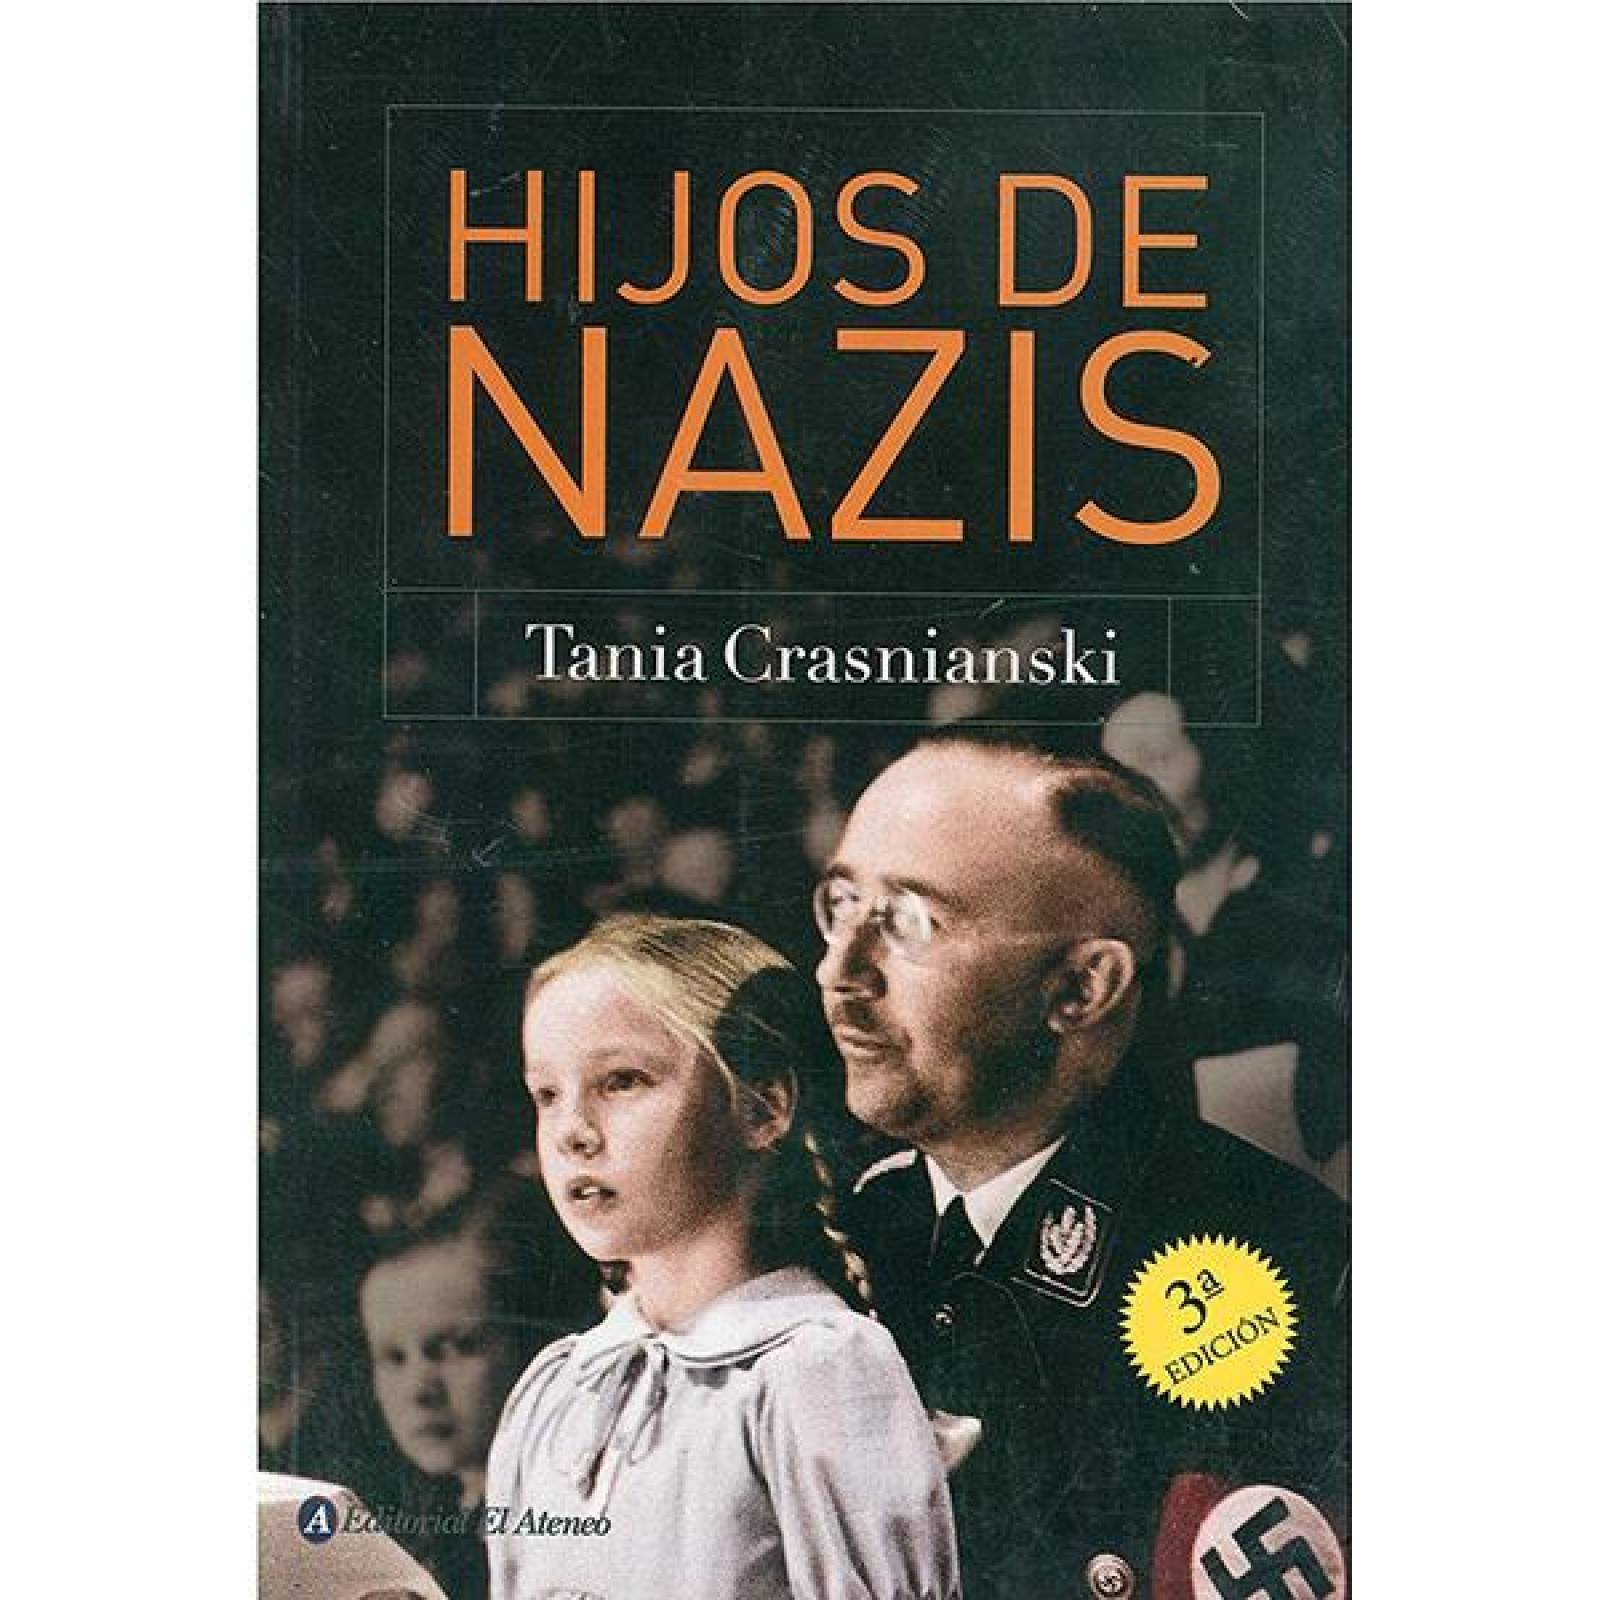 Hijos de nazis 